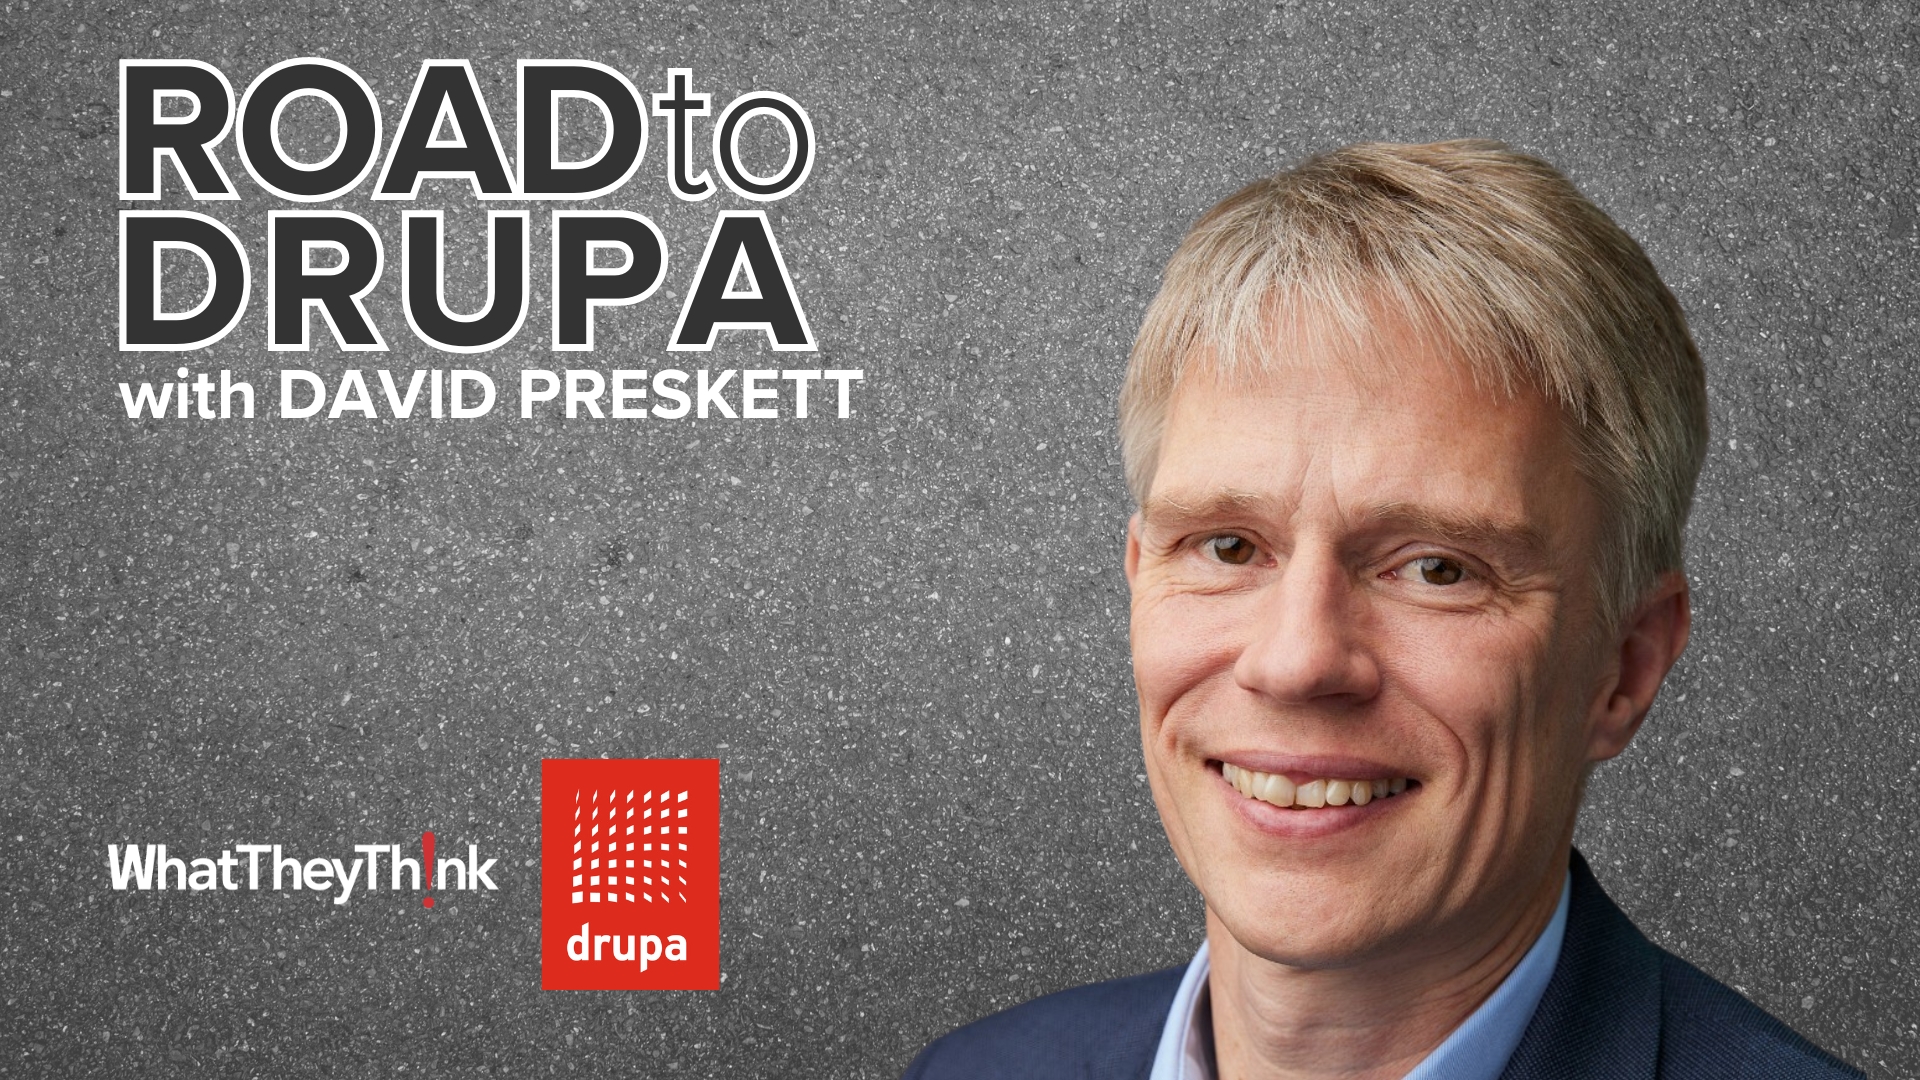 Video preview: Road to drupa: Kongsberg PCS’s David Preskett